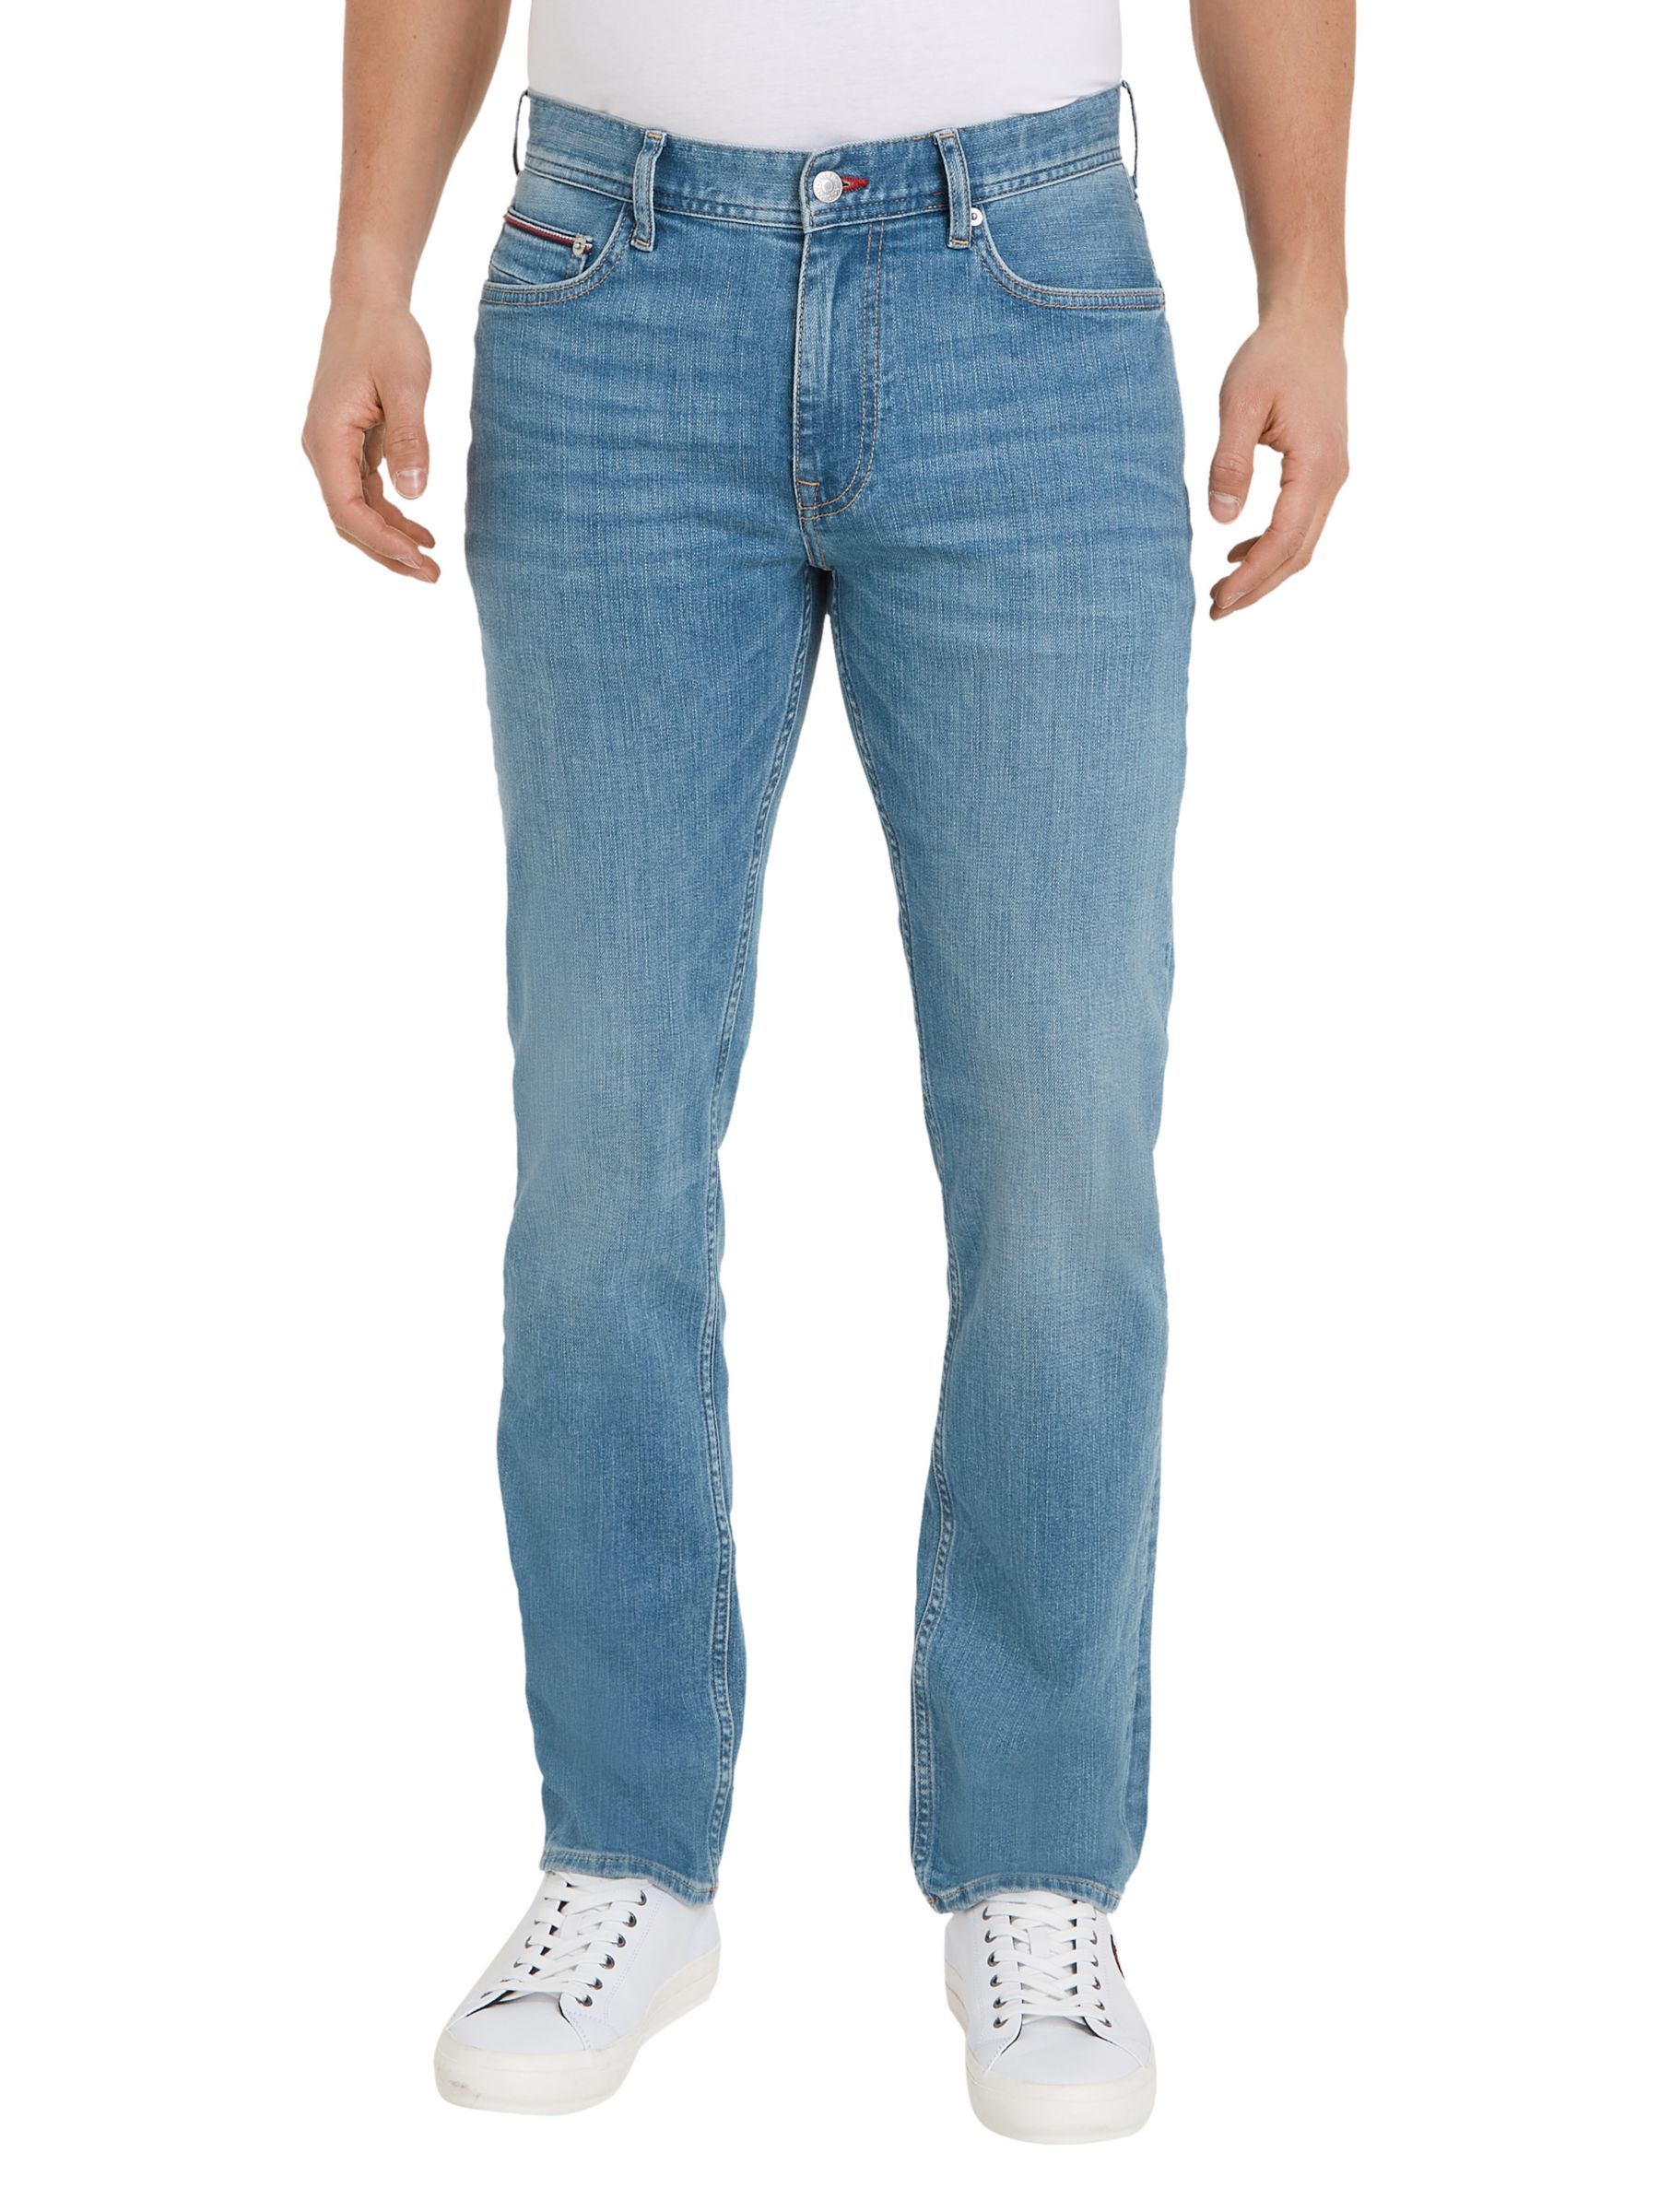 John Lewis Jeans Size 20 40 Inch Waist Blue Boyfriend 100% Cotton RRP£42